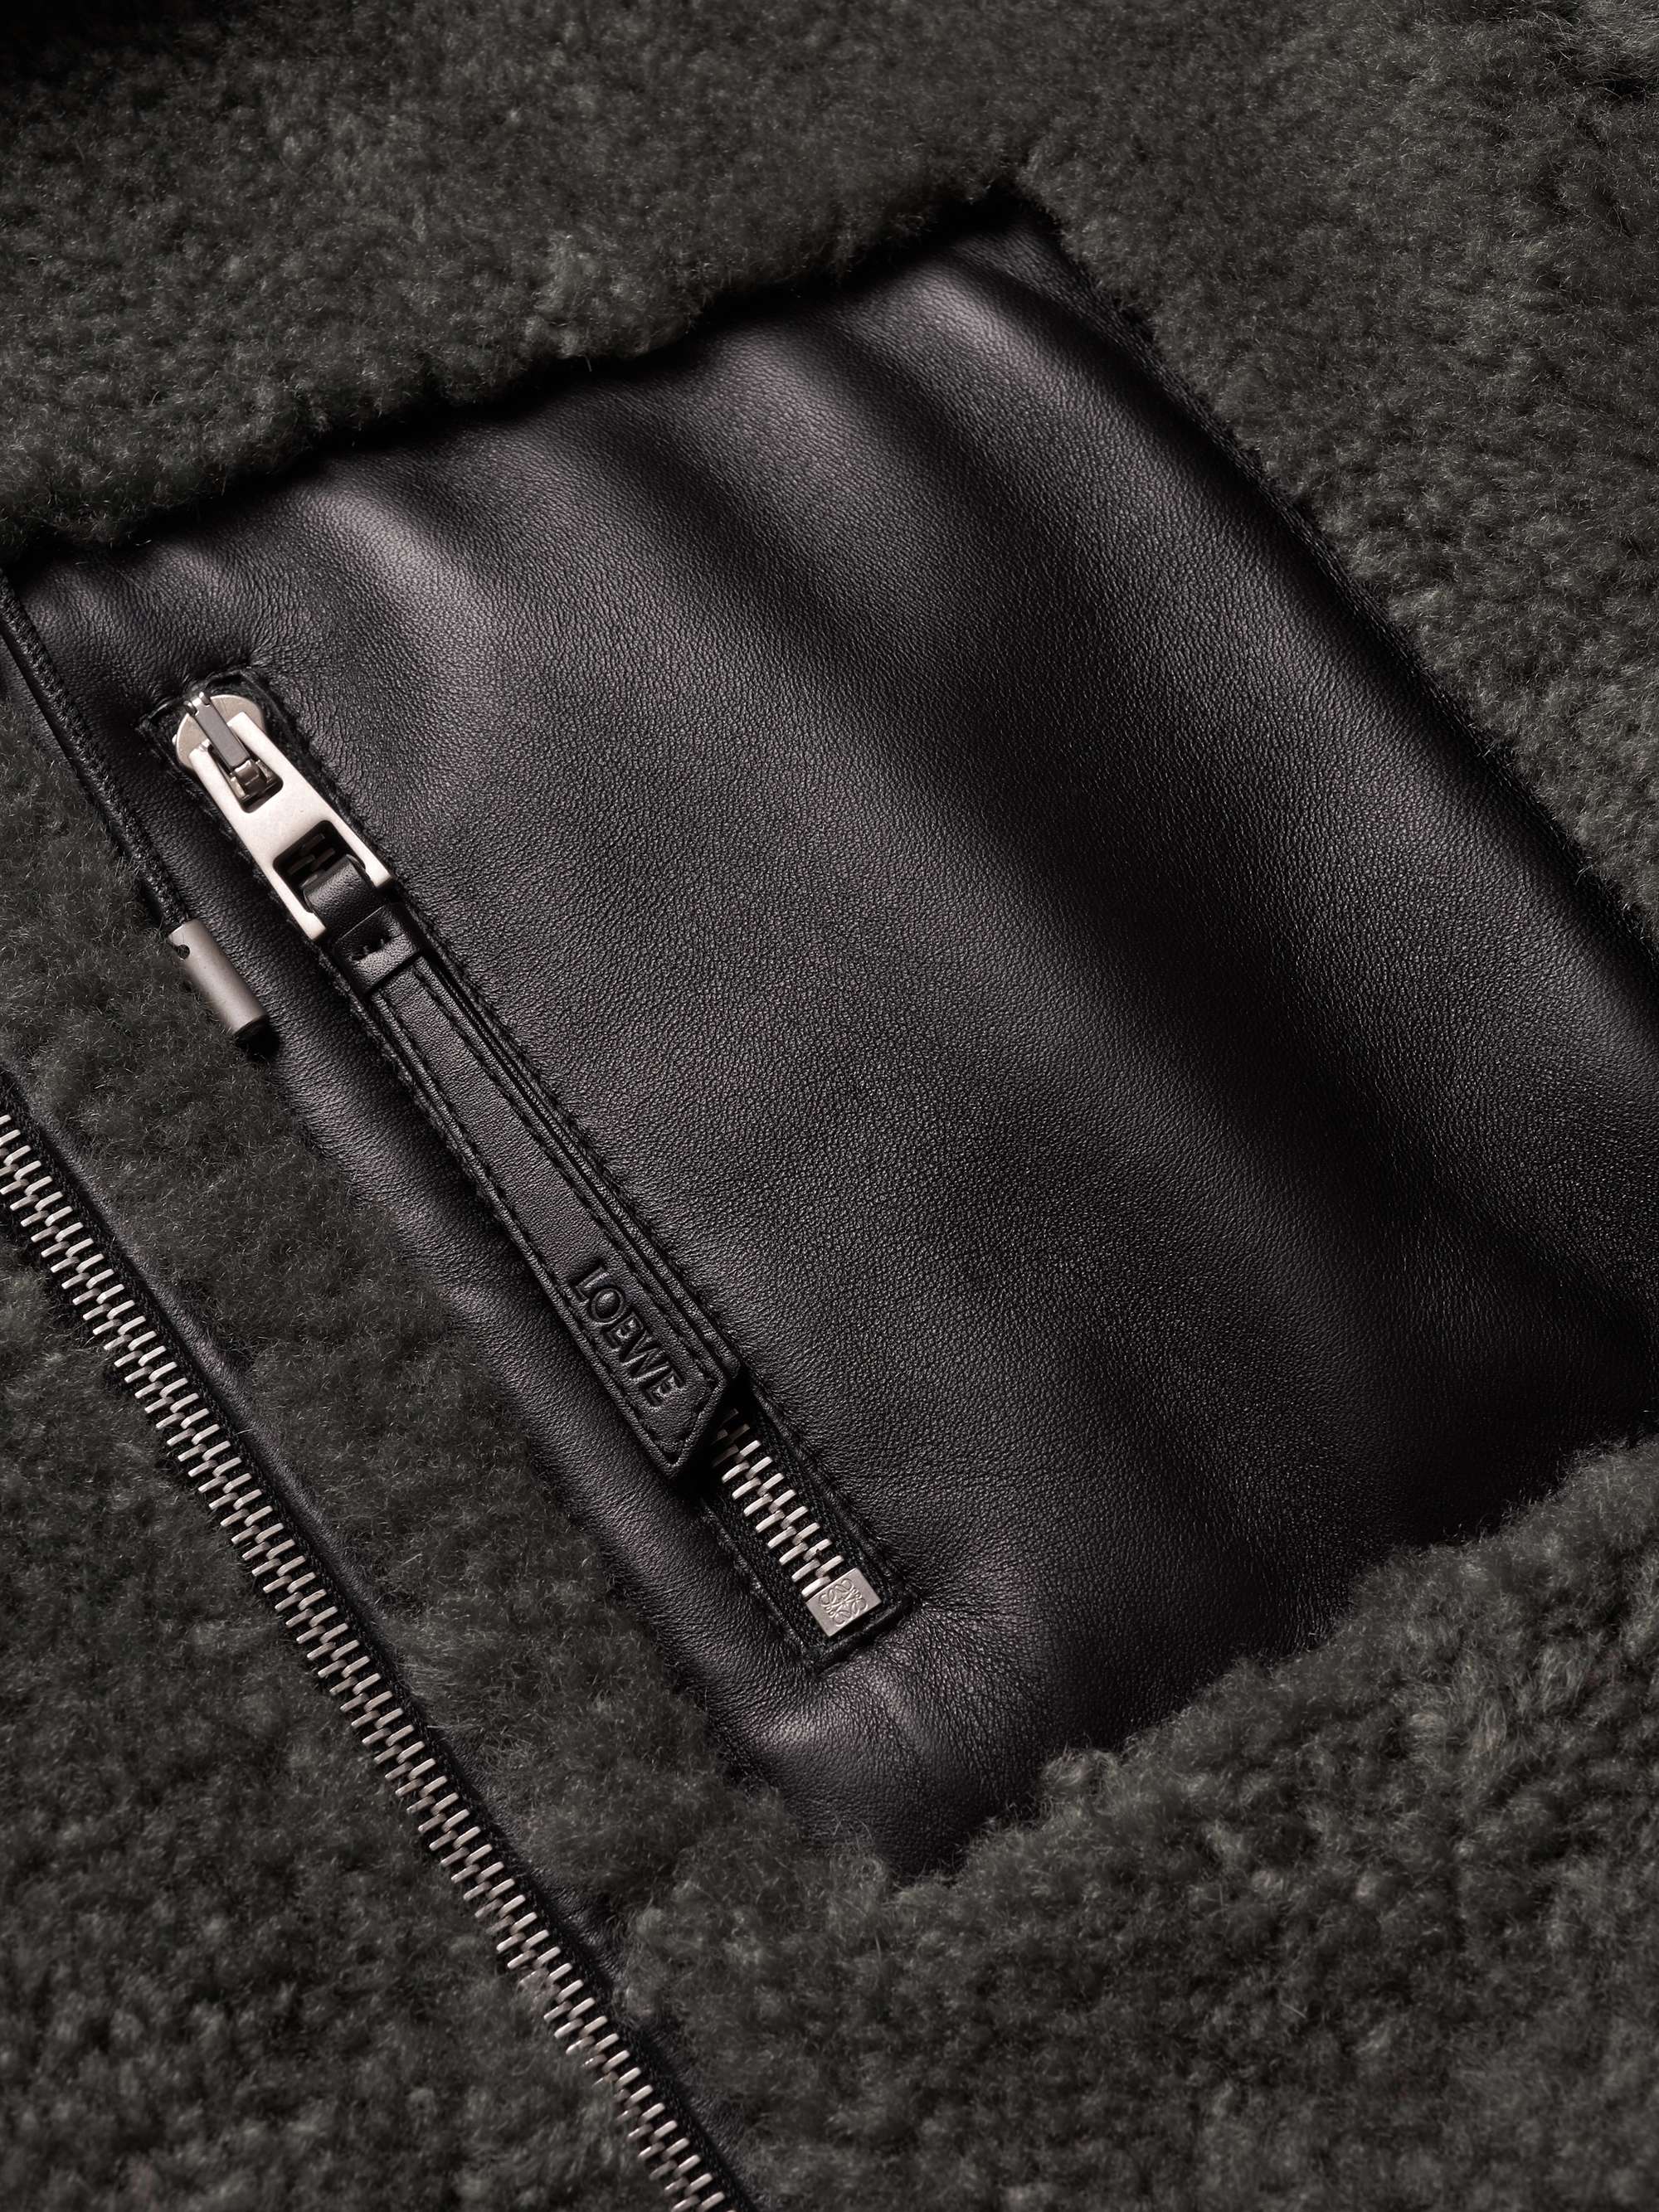 LOEWE Leather-Trimmed Shearling Jacket